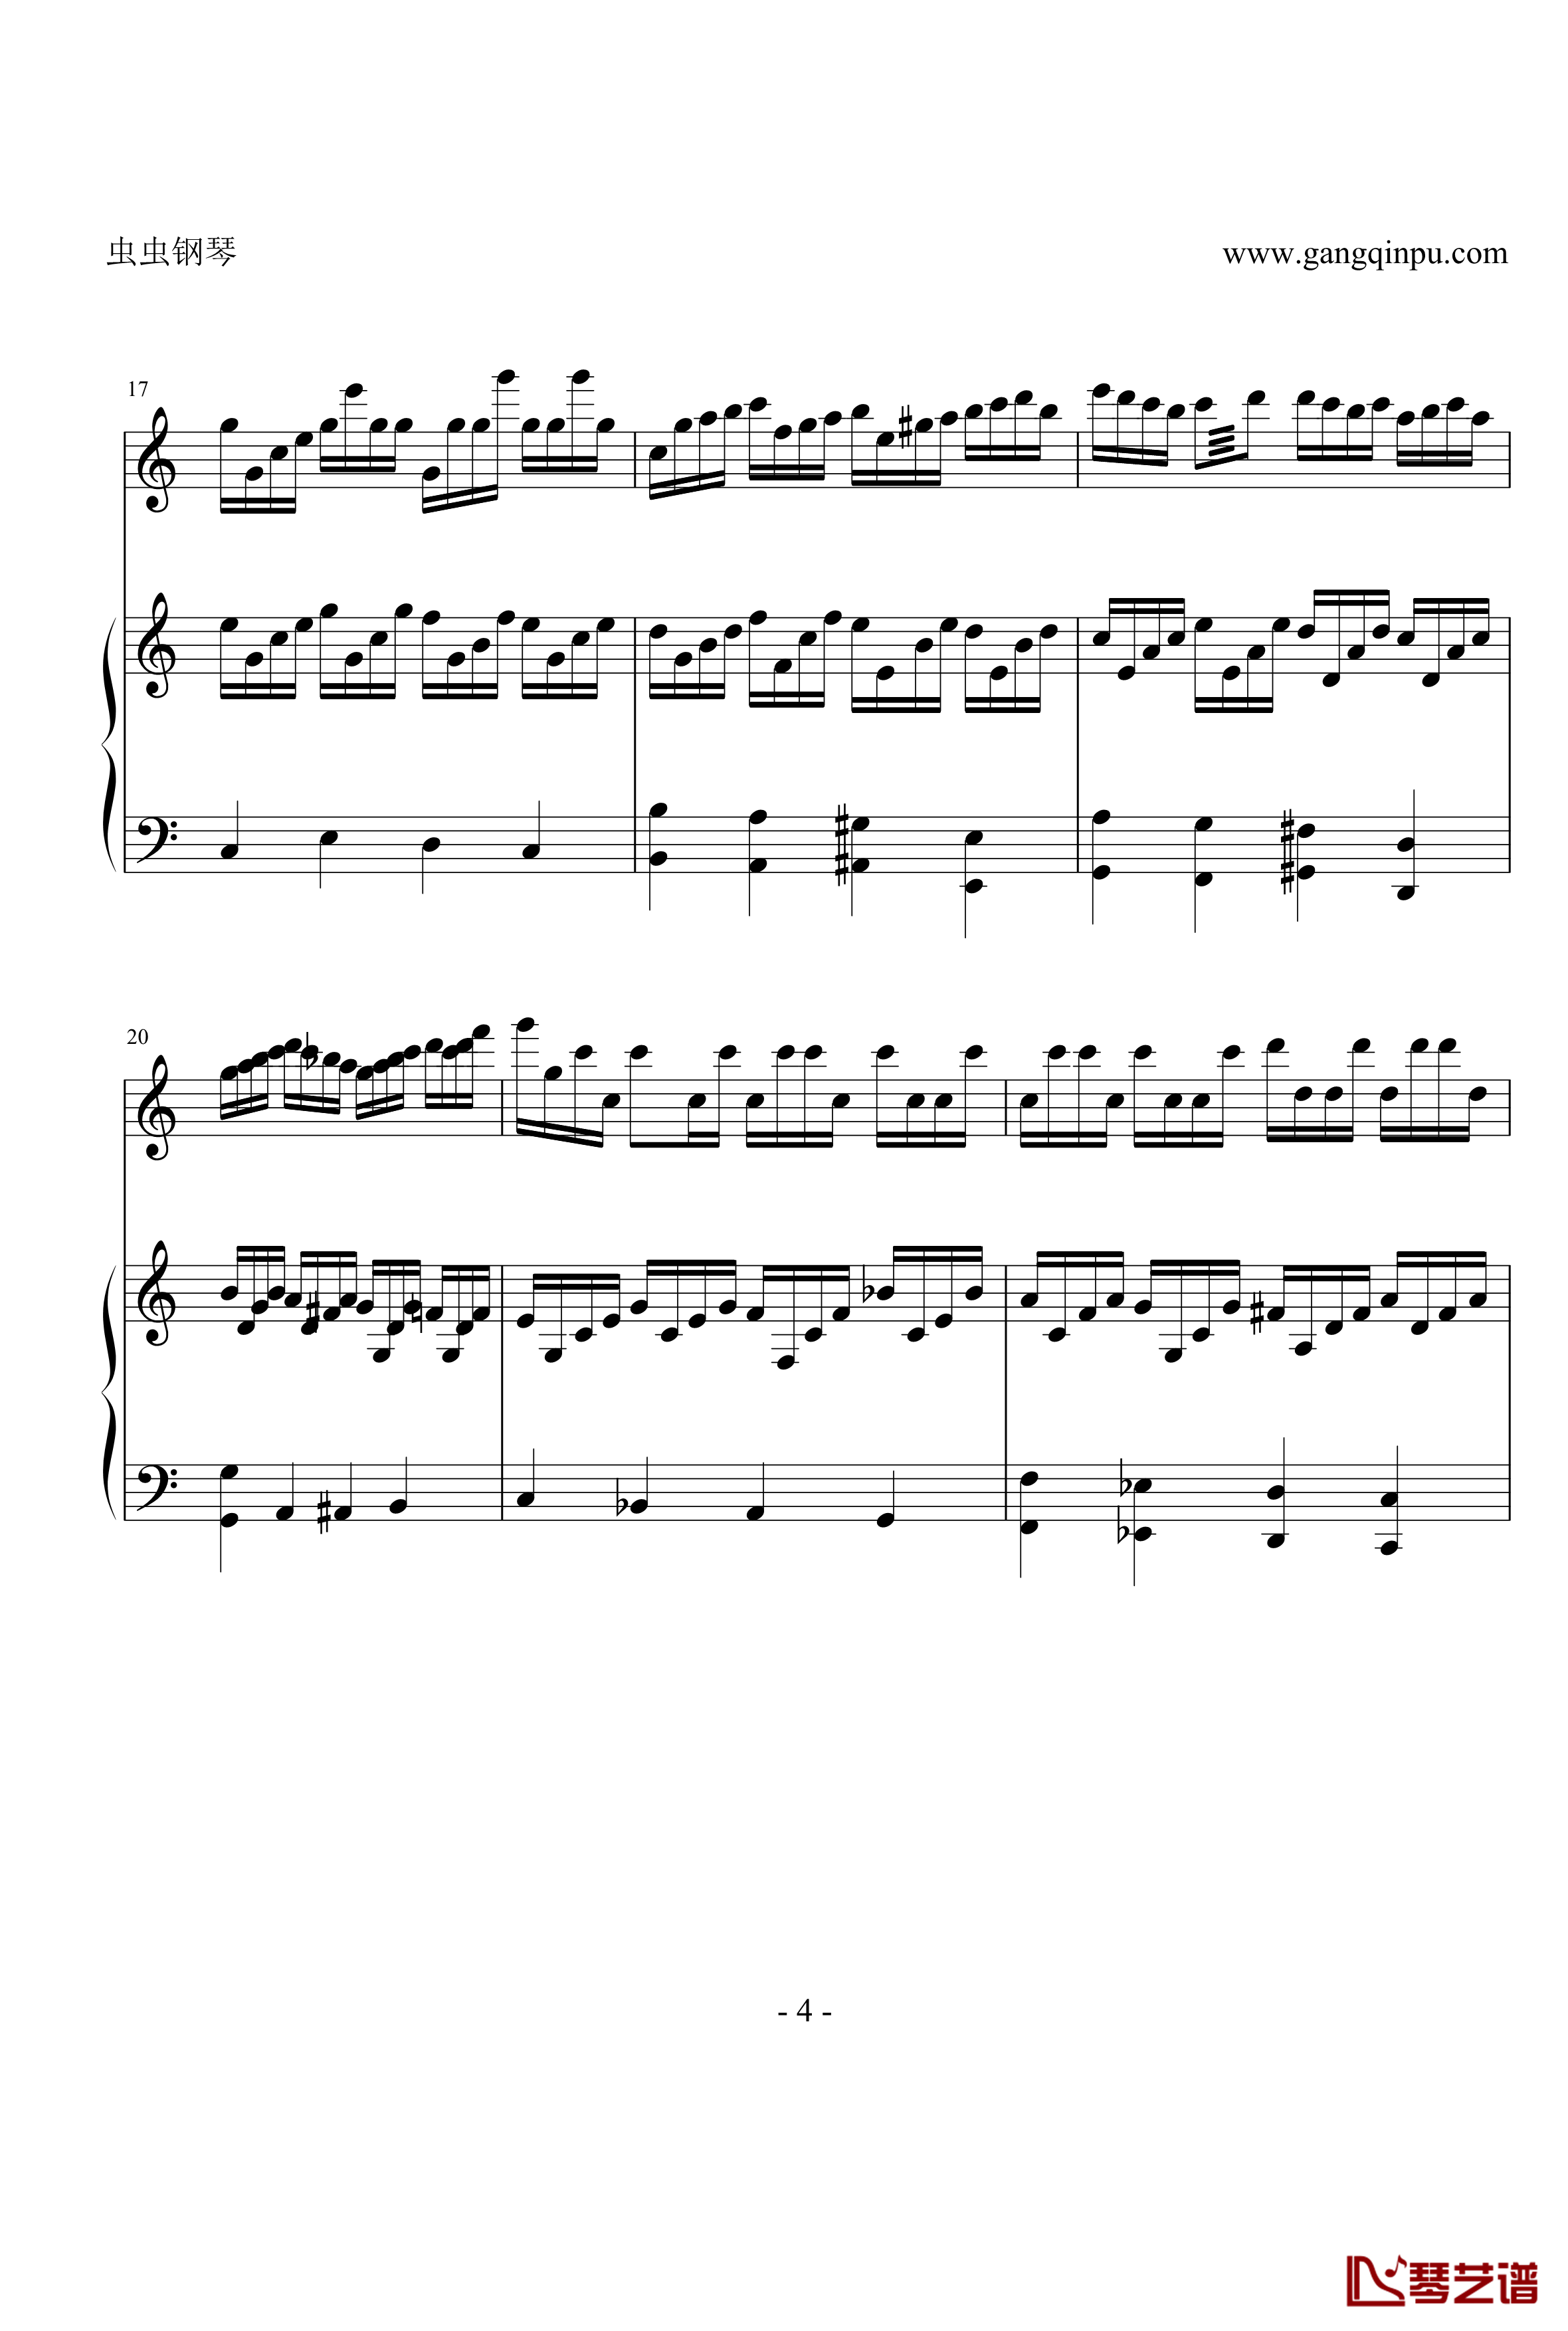 Study for Three Hands钢琴谱-海上钢琴师4